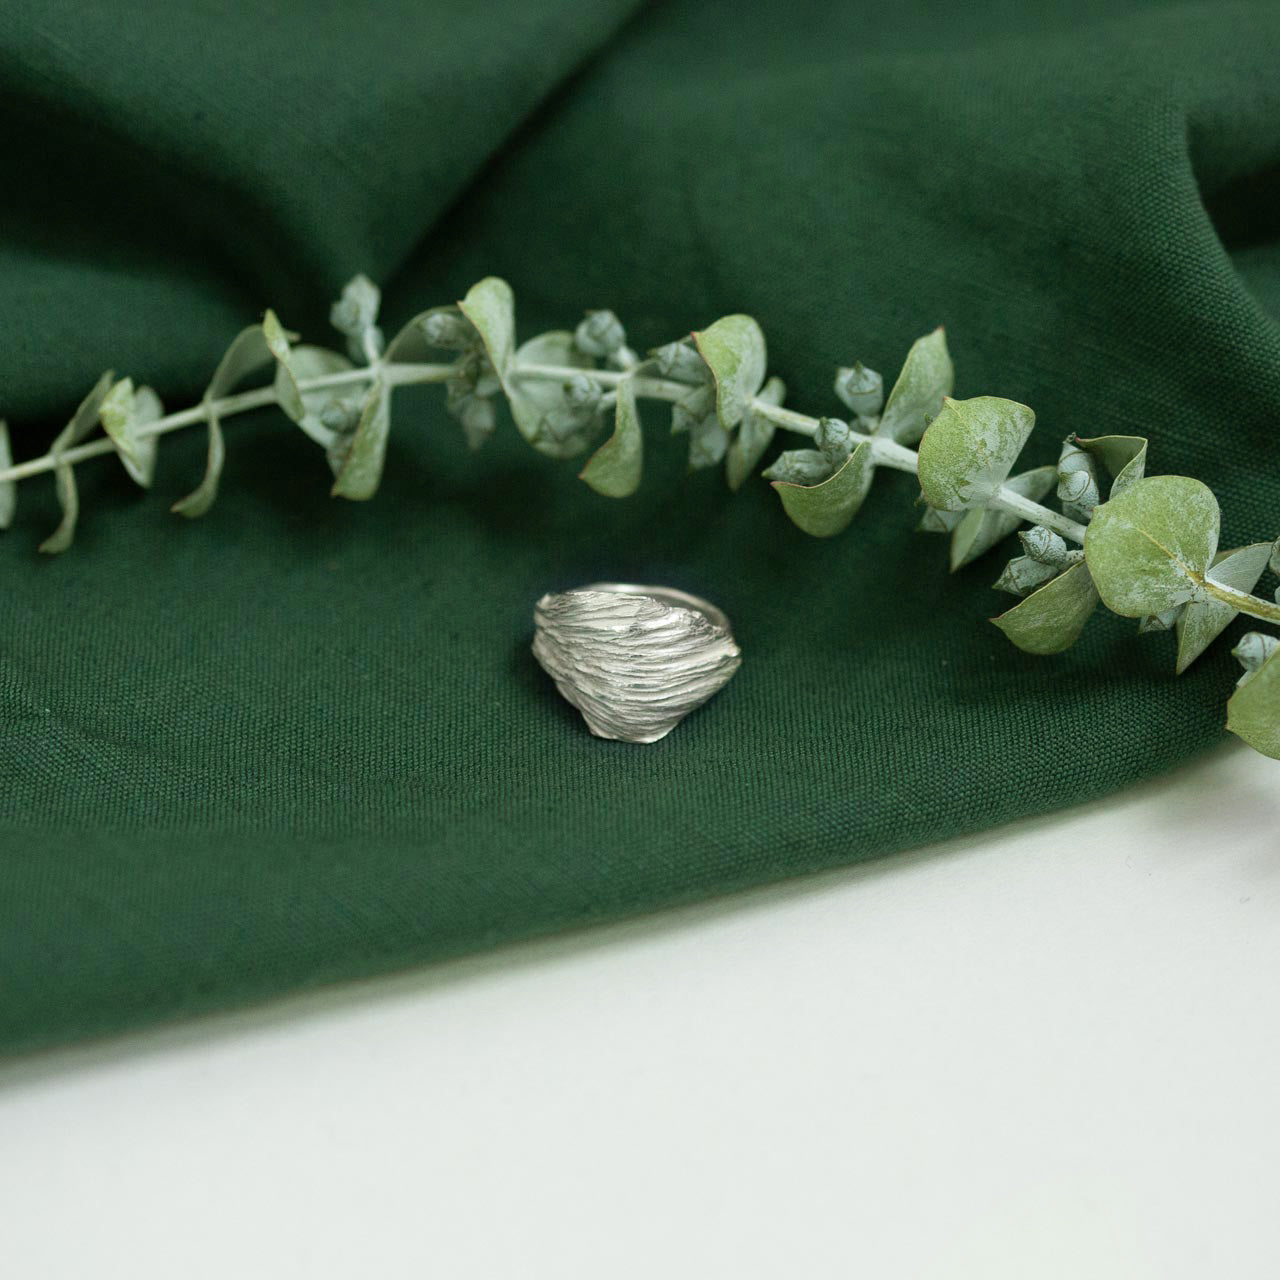 silver artichoke leaf ring on green cloth with dried flower